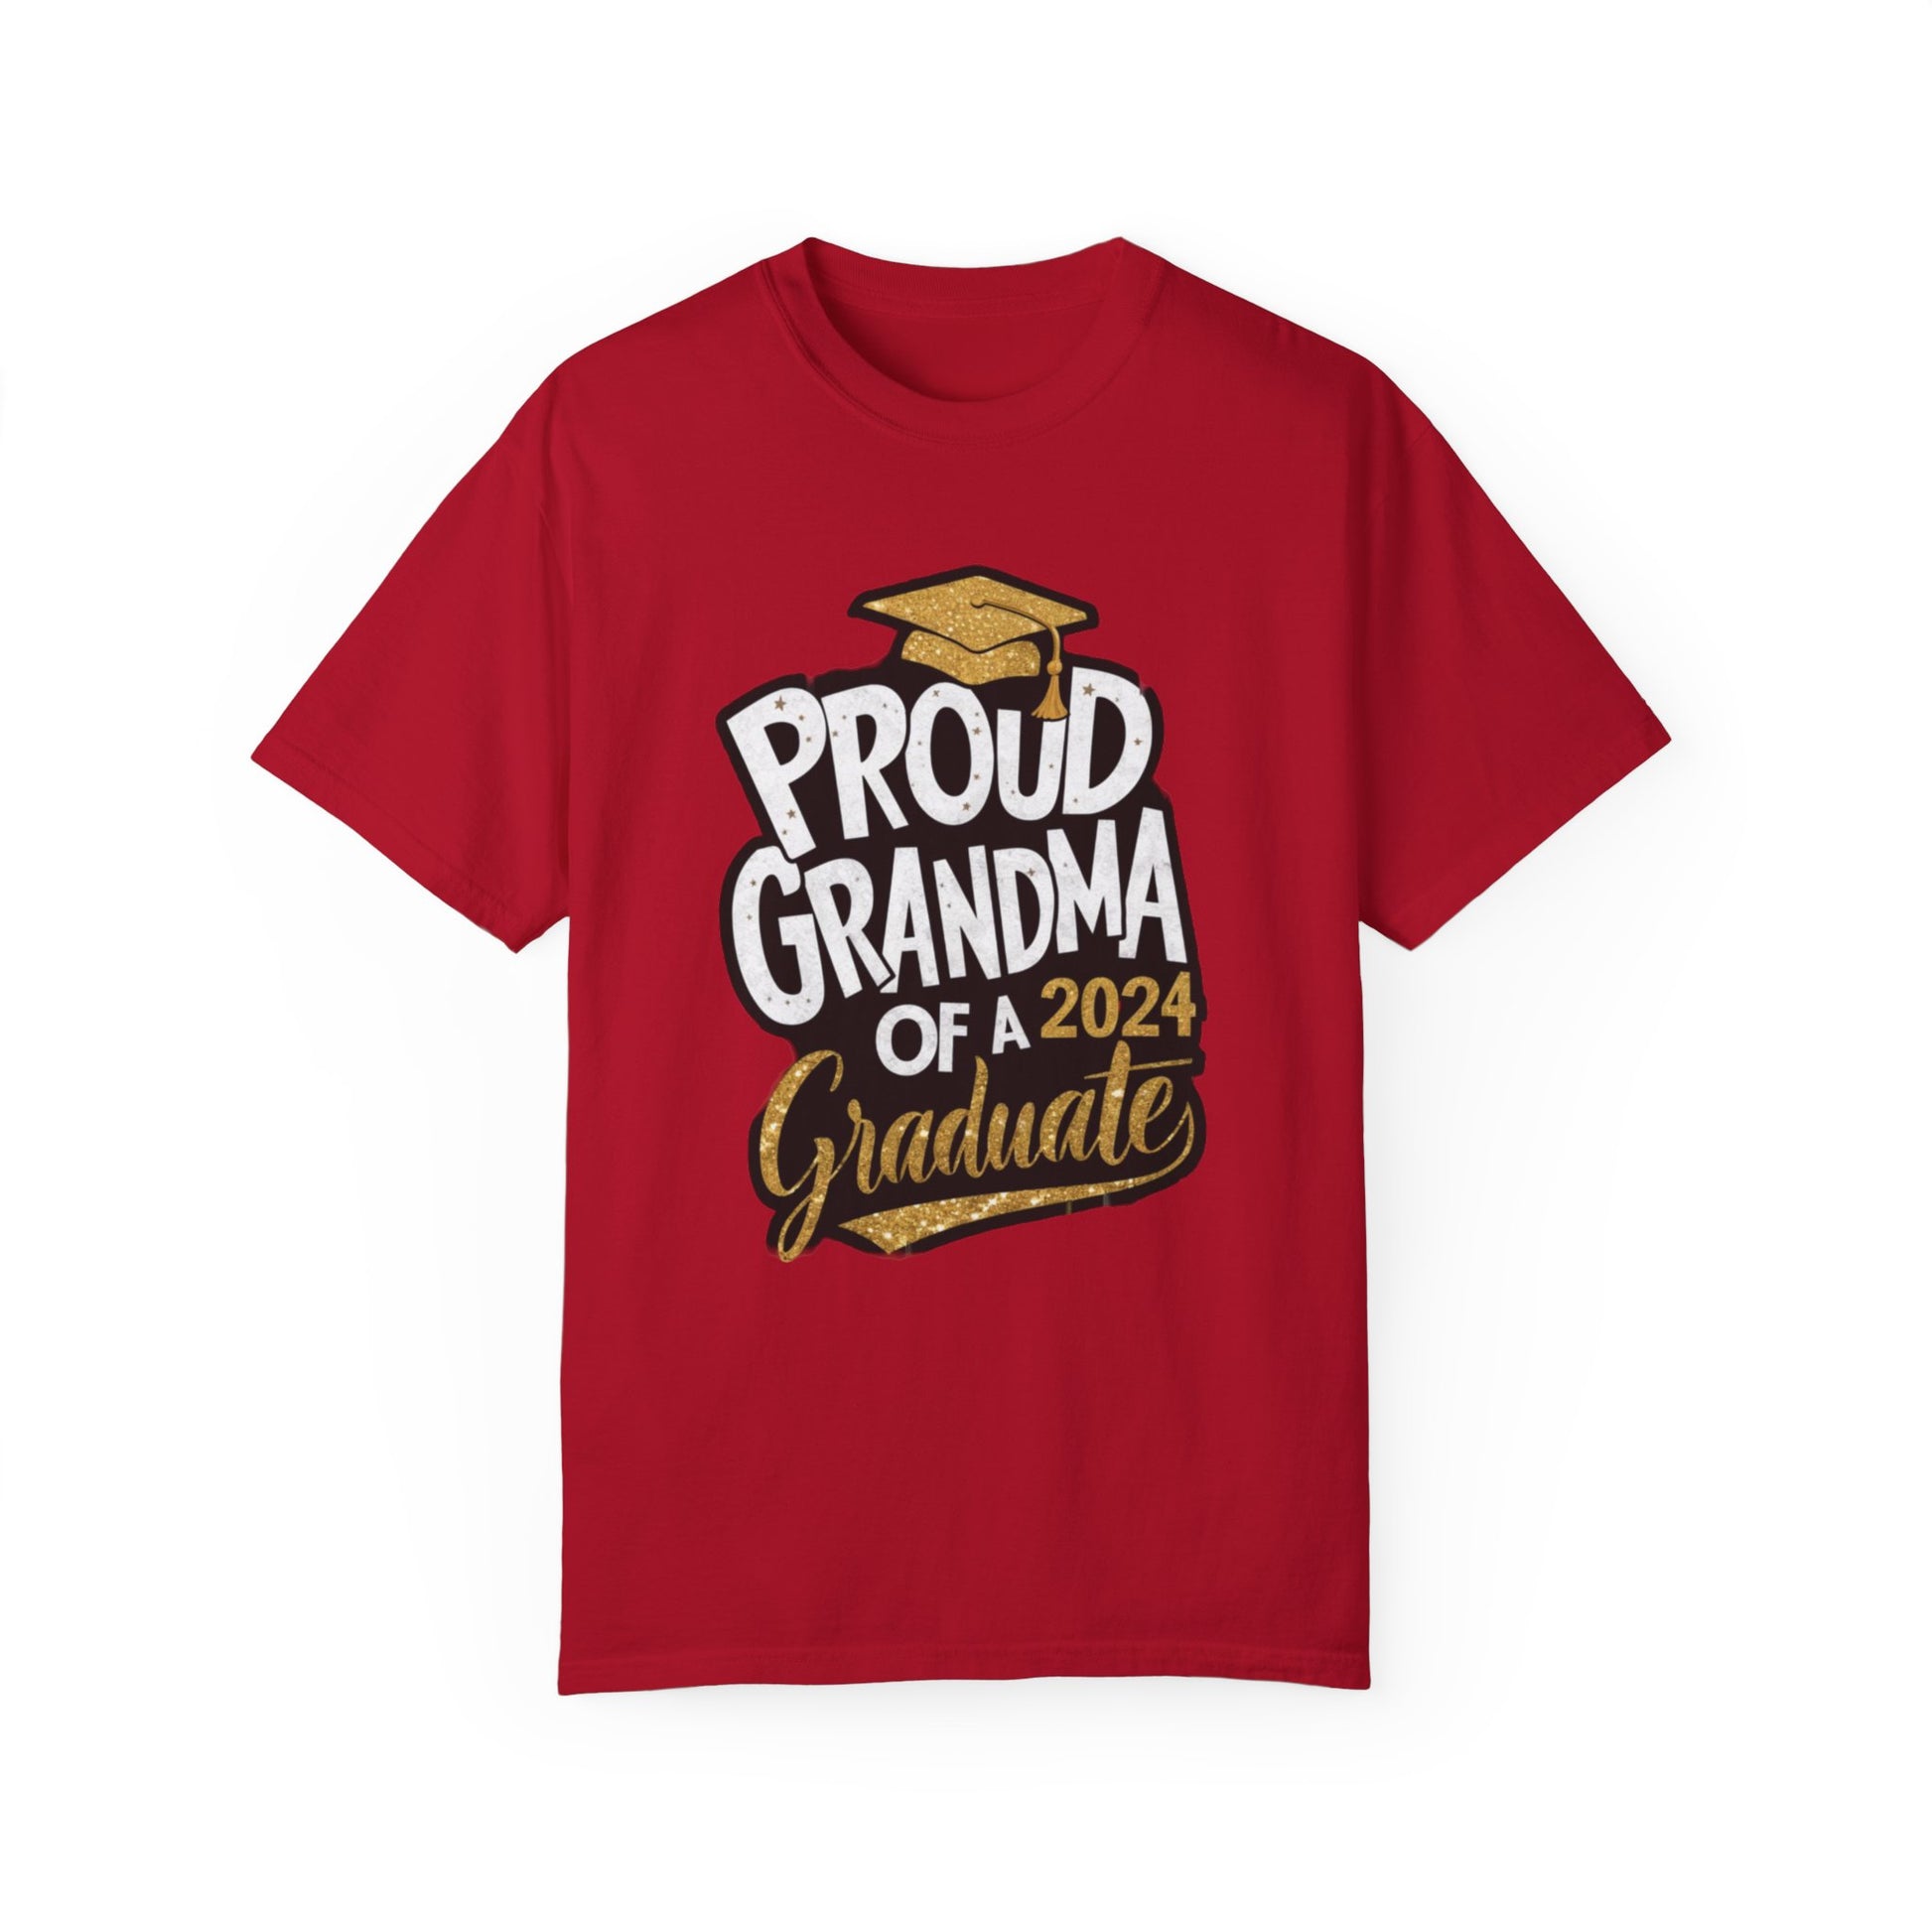 Proud of Grandma 2024 Graduate Unisex Garment-dyed T-shirt Cotton Funny Humorous Graphic Soft Premium Unisex Men Women Red T-shirt Birthday Gift-2